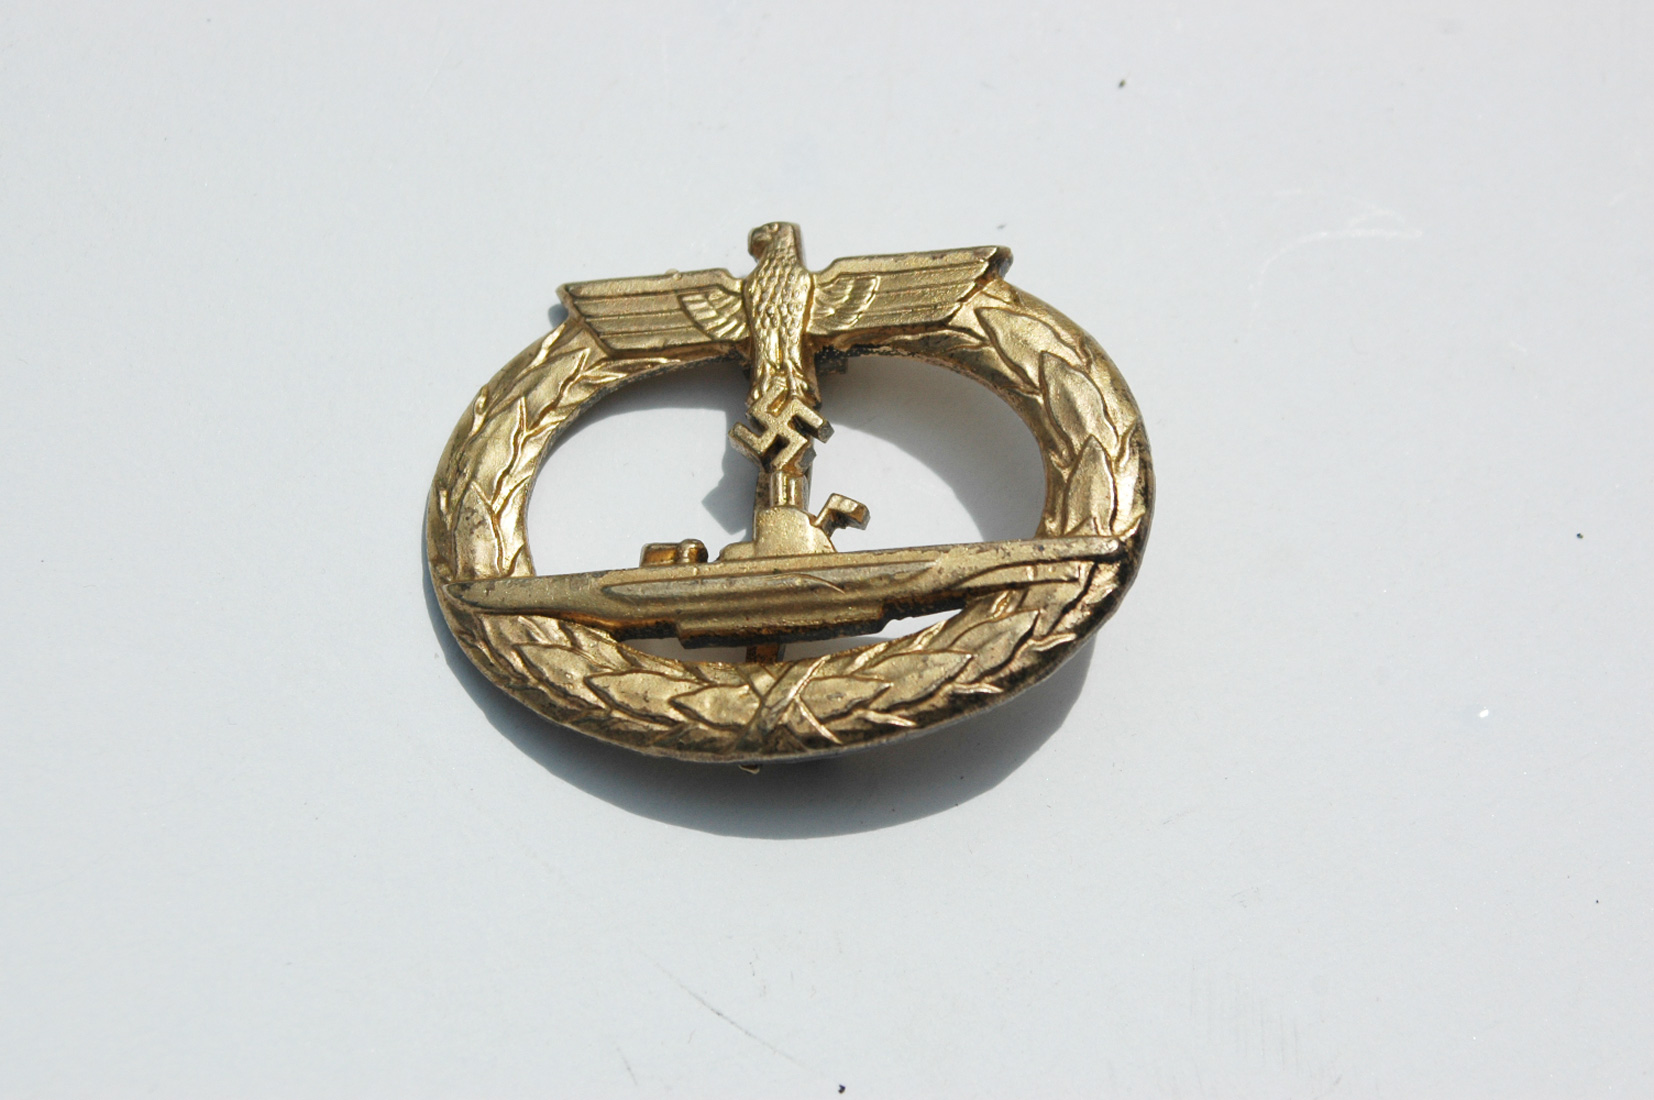 Reproduction German WWII U-Boat Badge  Sold as an Original